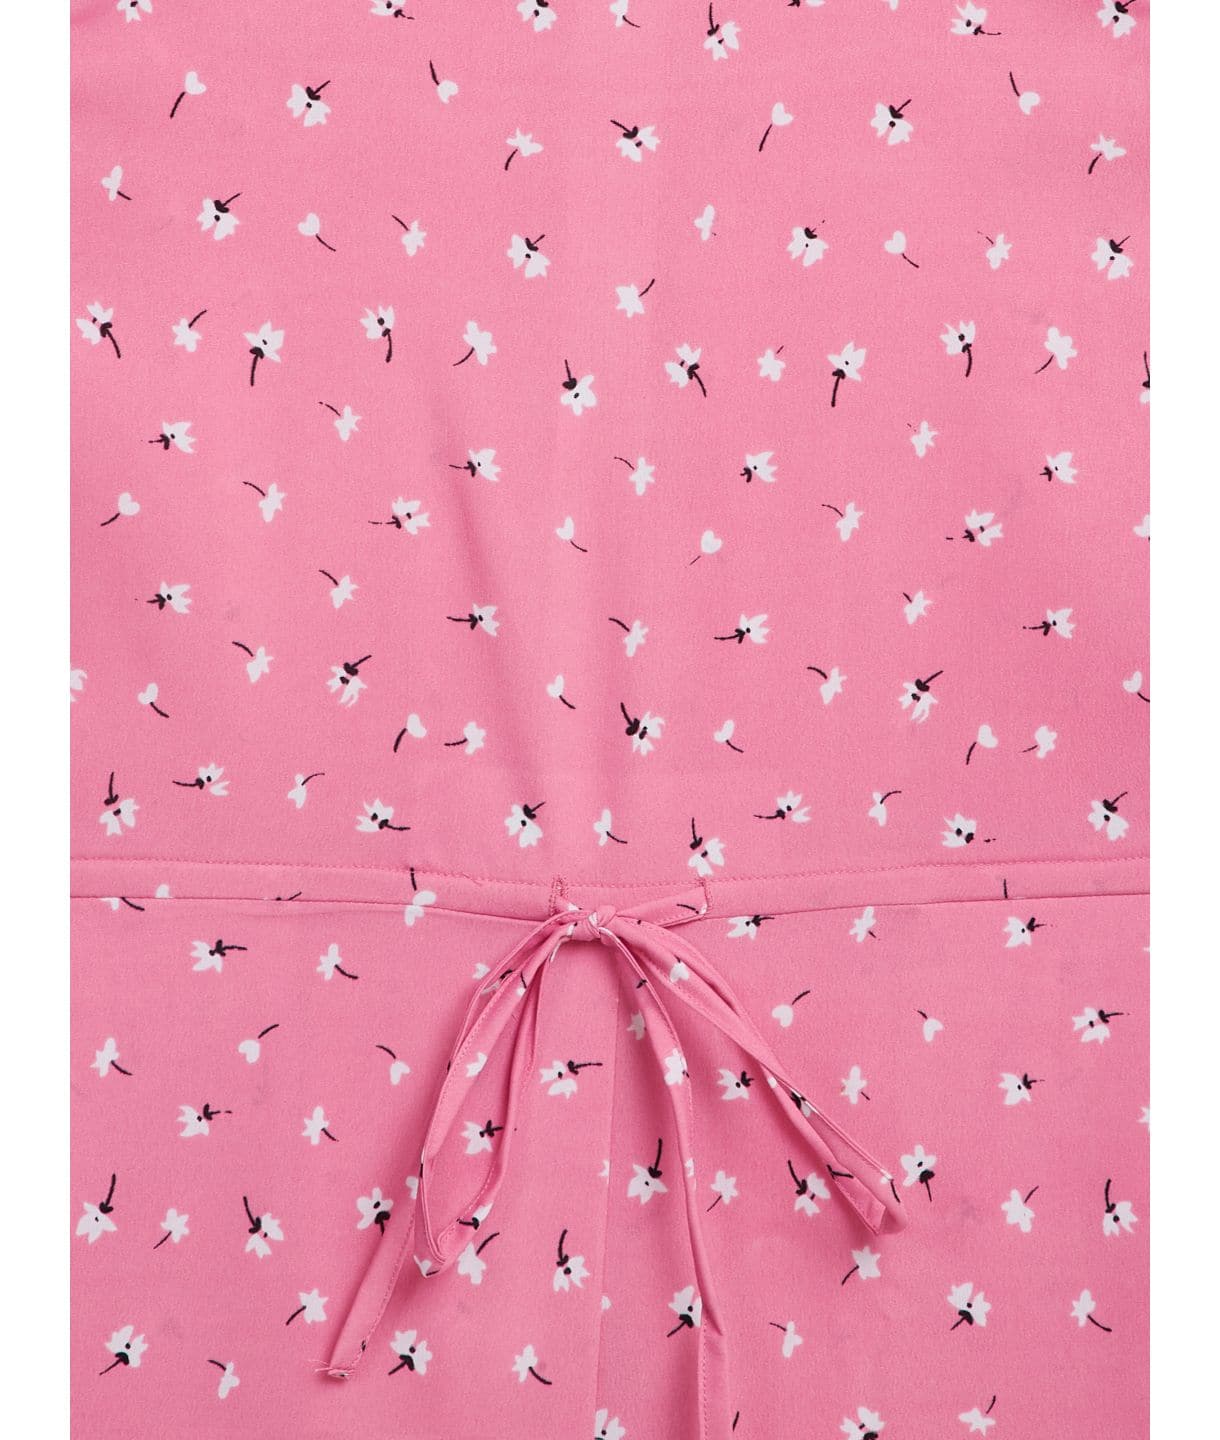 Printed Waist-tie Playsuit for Girls - Uptownie